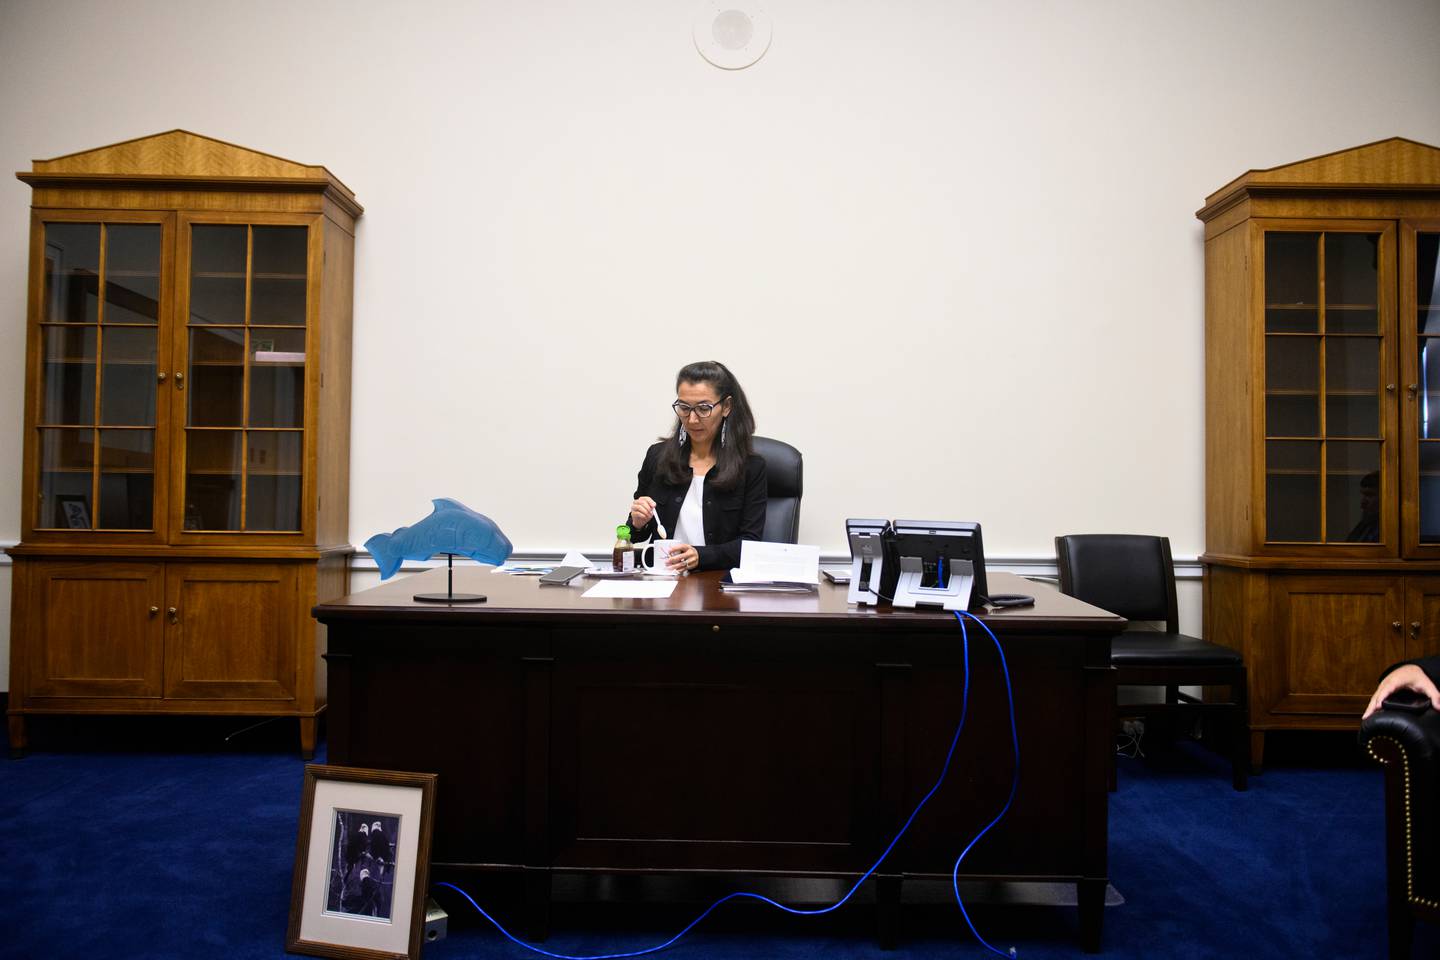 Representative, Mary Peltola, Congress, Washington D.C.